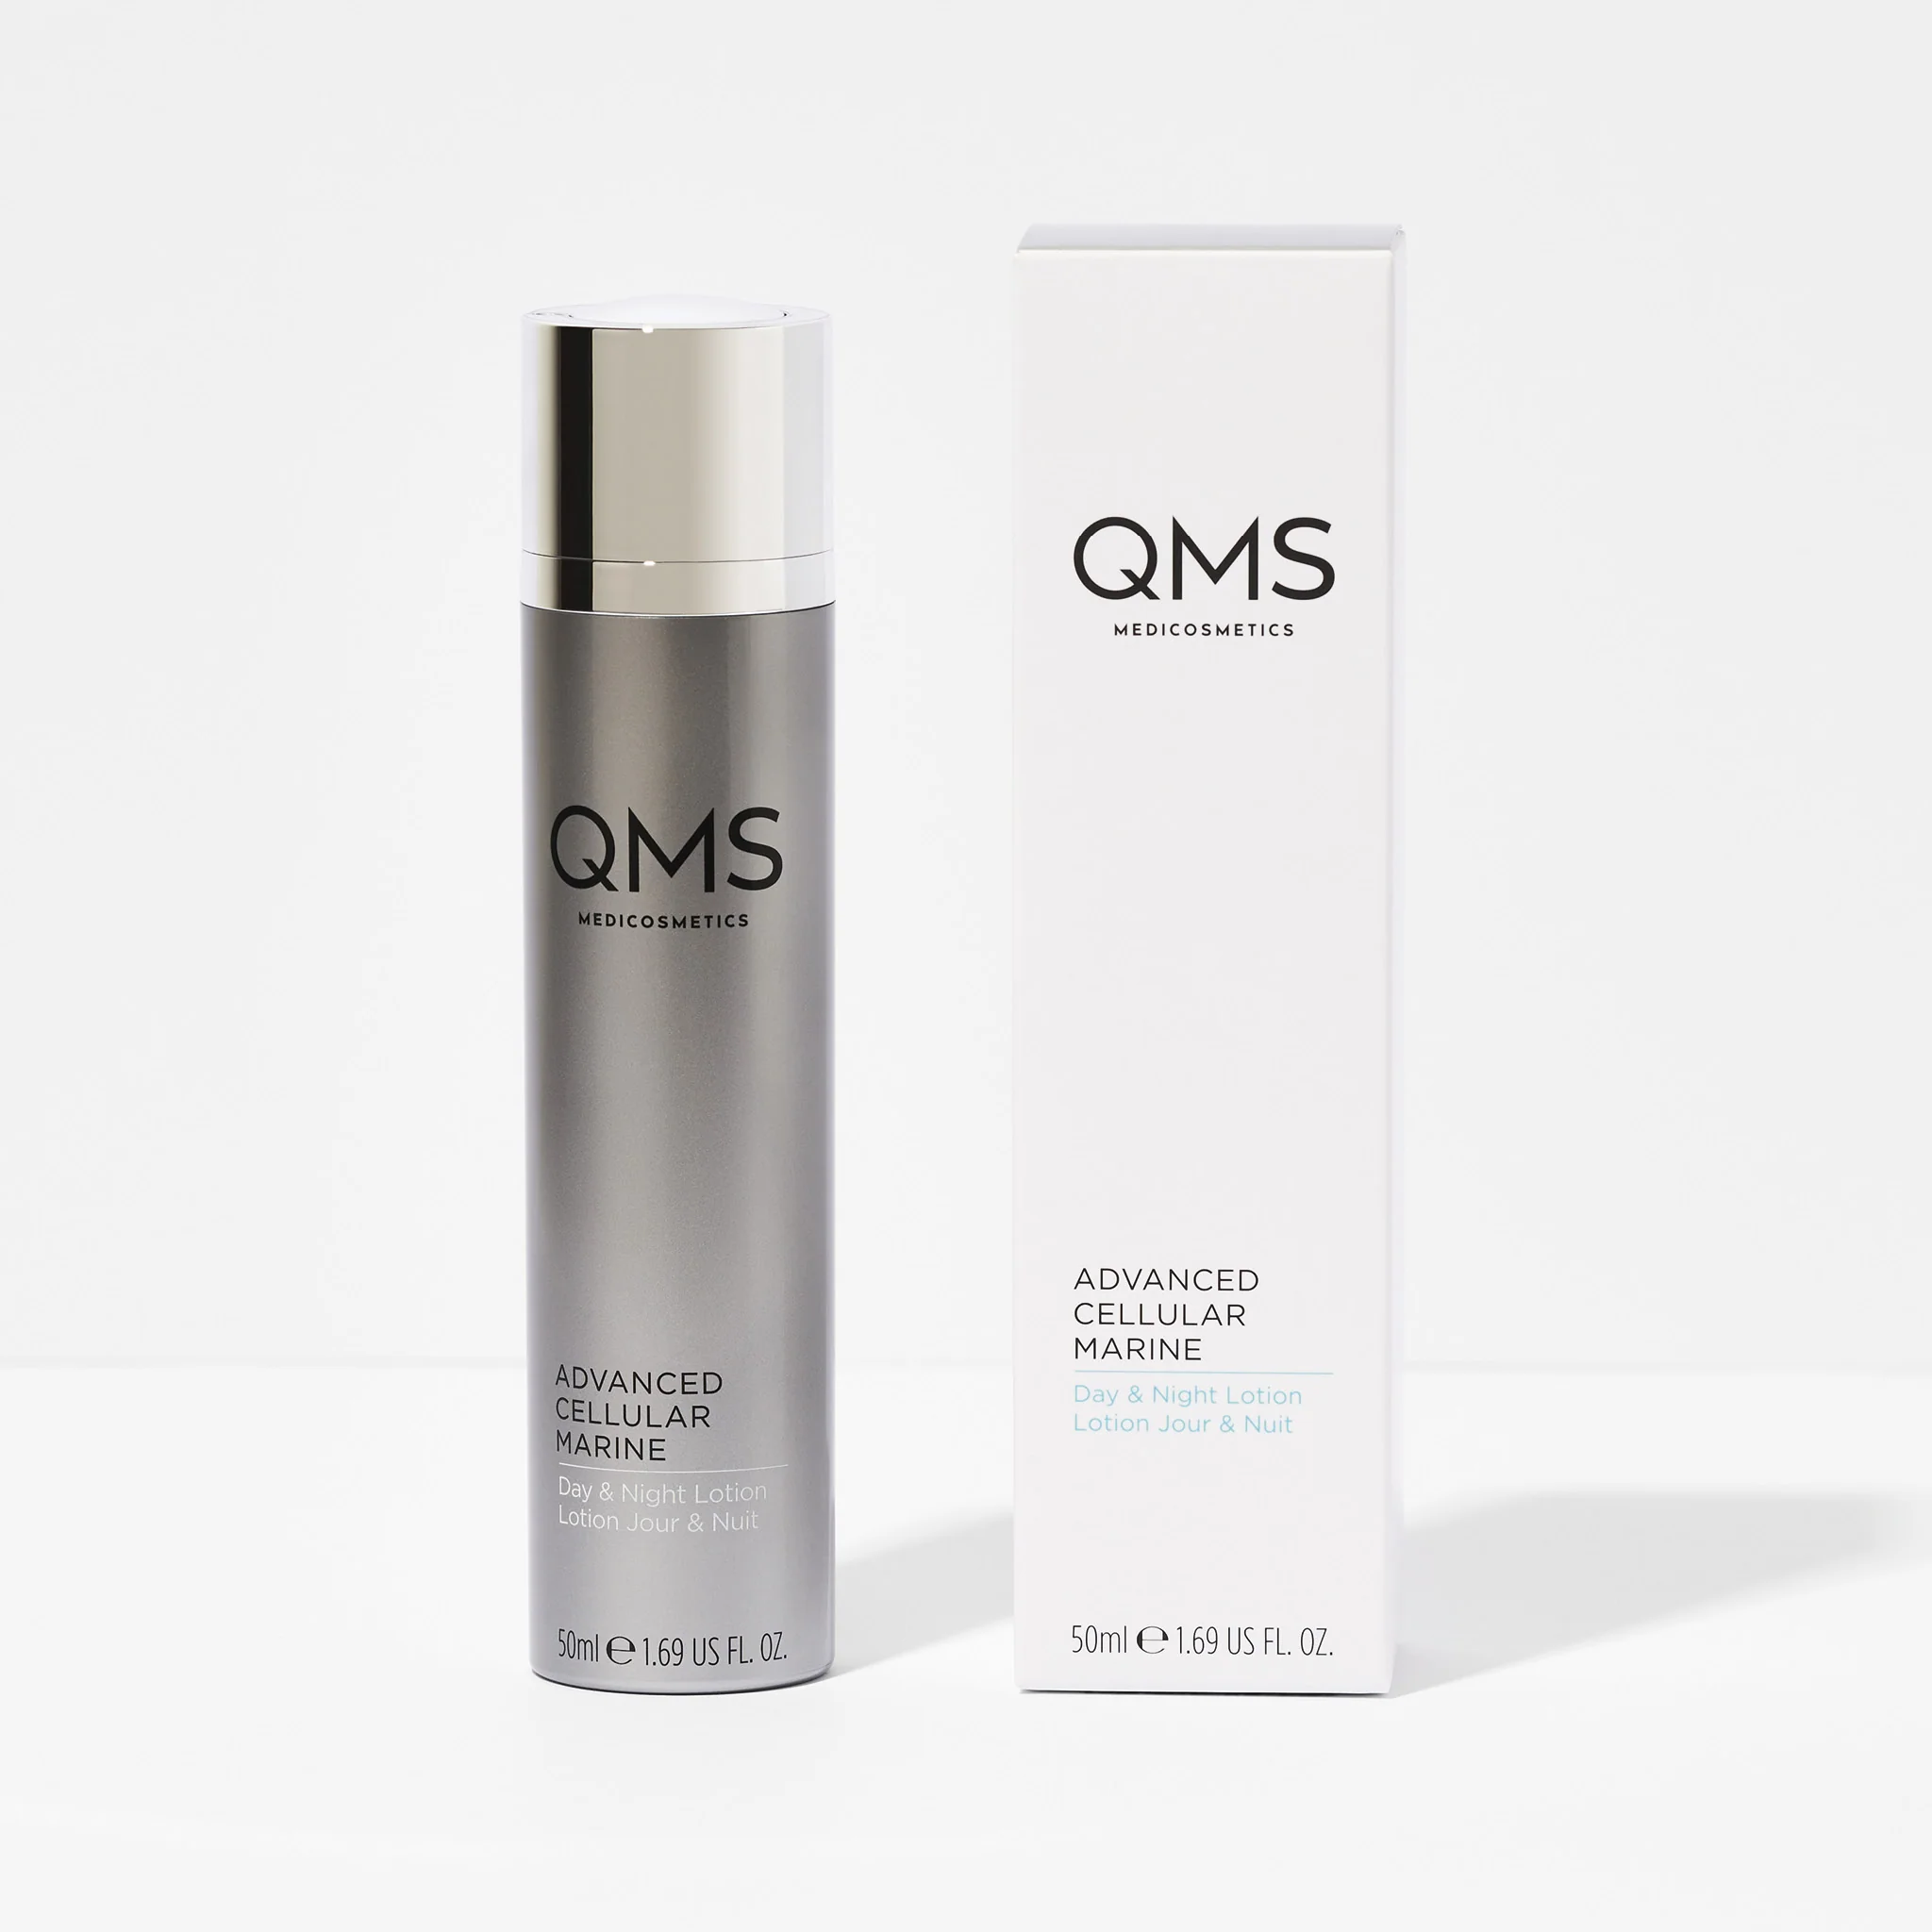 QMS Medicosmetics Advanced Cellular Marine Day & Night Lotion 50 ml